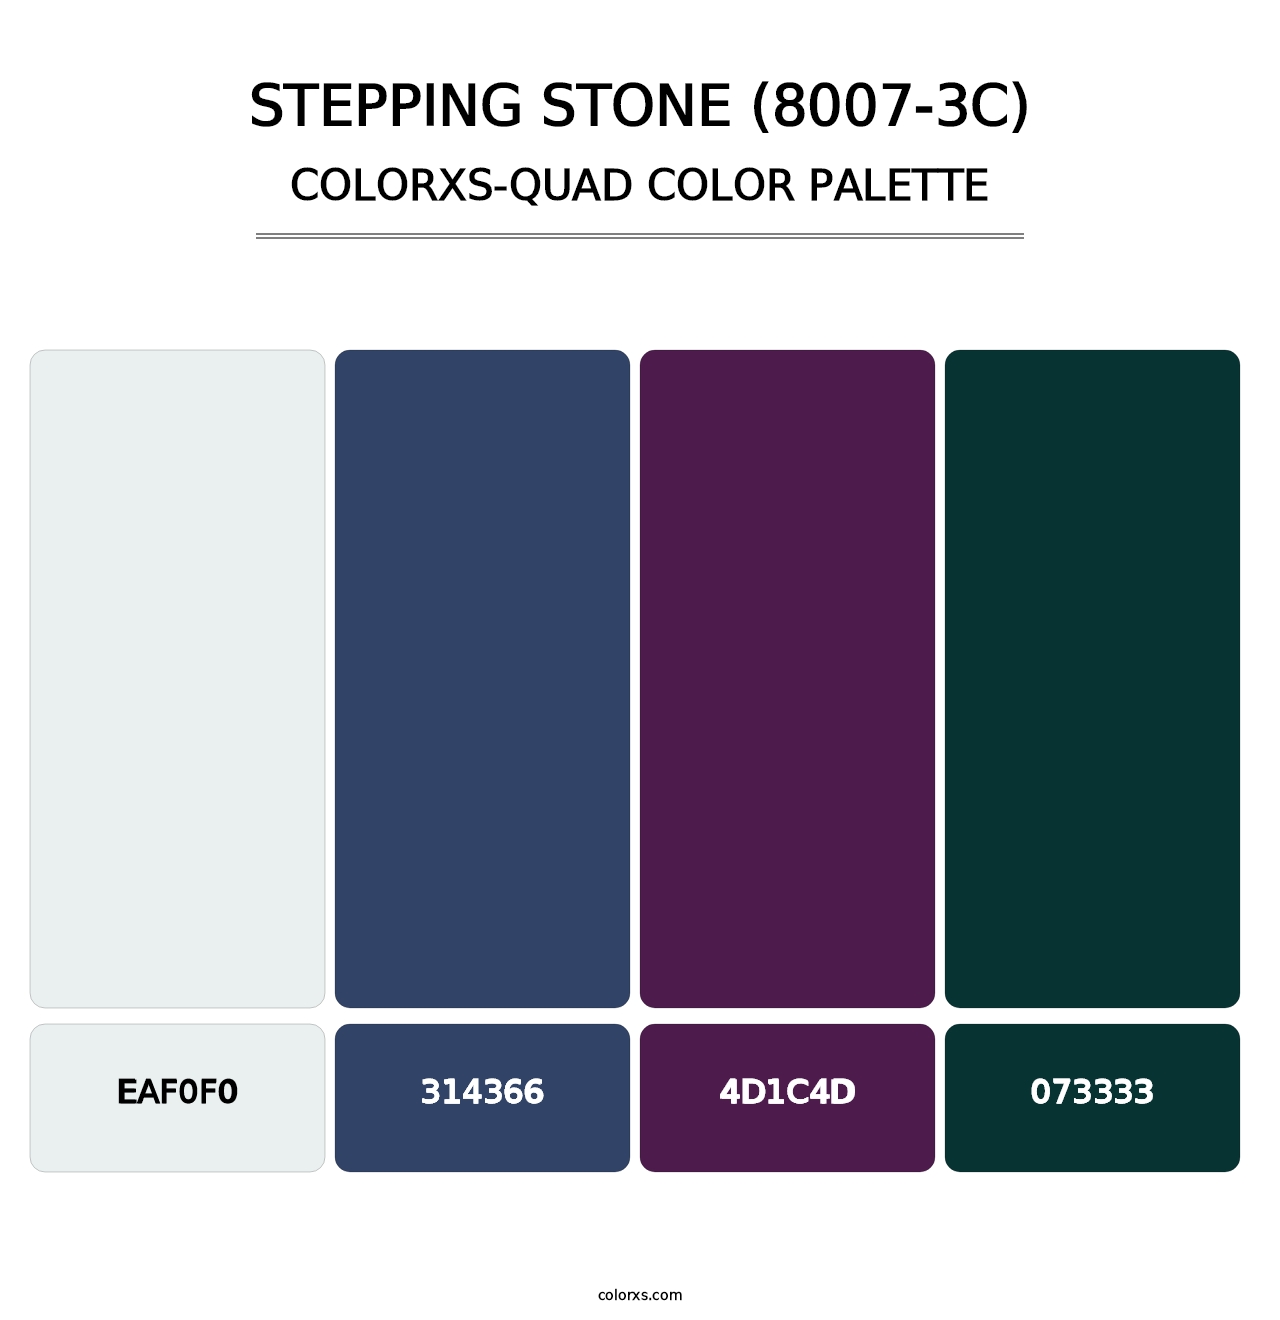 Stepping Stone (8007-3C) - Colorxs Quad Palette